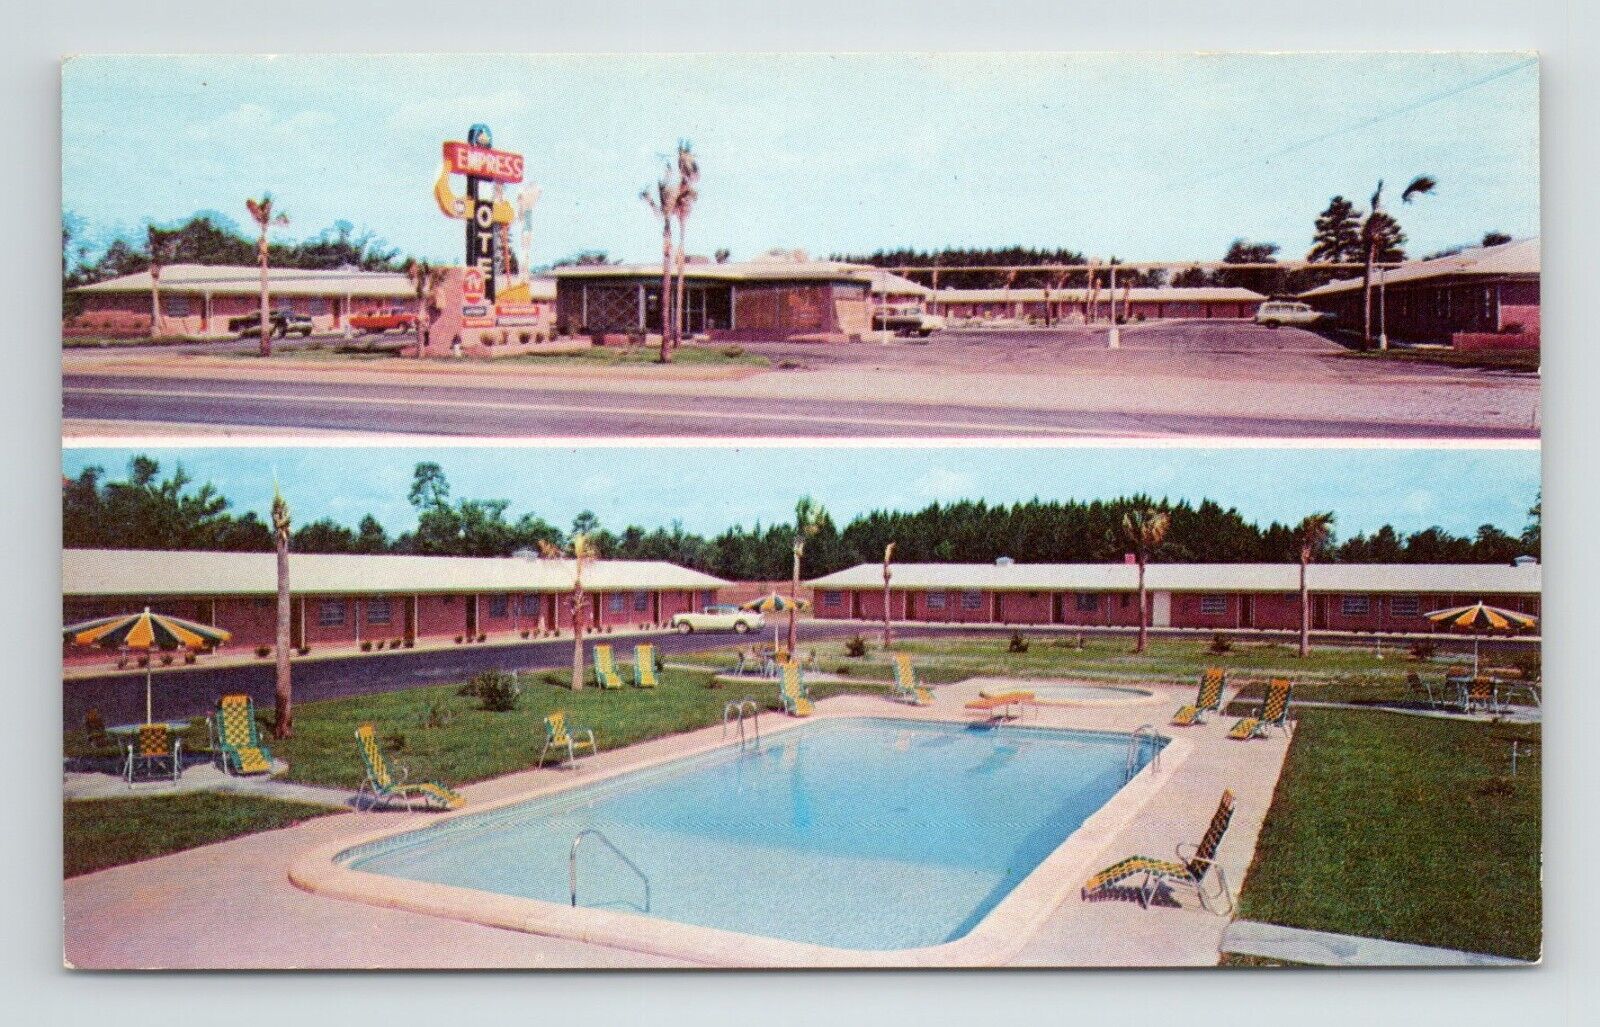 Empress Motel Motor Lodge Pool AAA US 301 Allendale South Carolina VTG Postcard